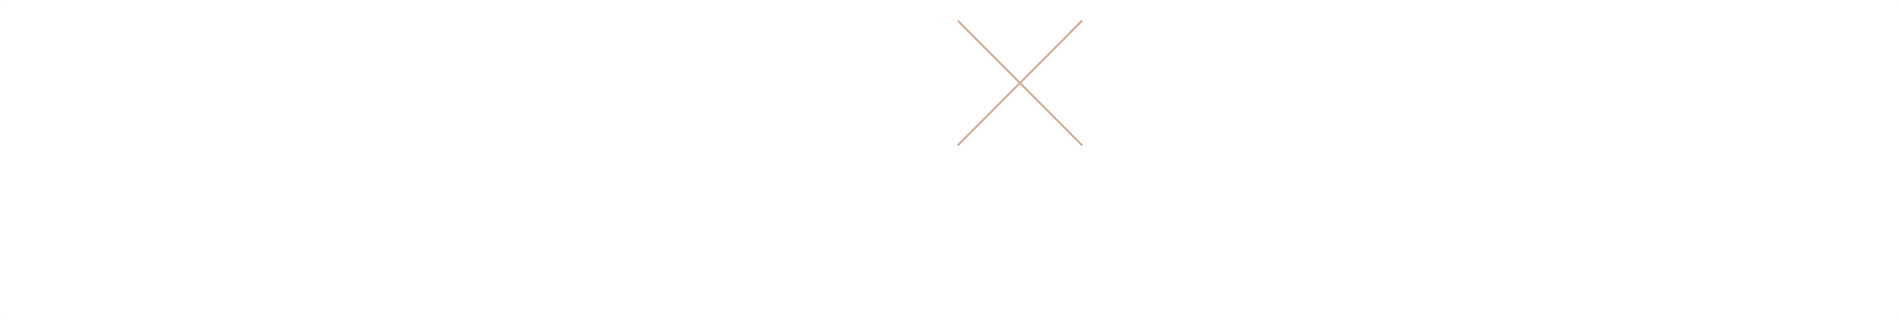 JR横須賀線・湘南新宿ライン「武蔵小杉」駅徒歩9分×水辺の安息